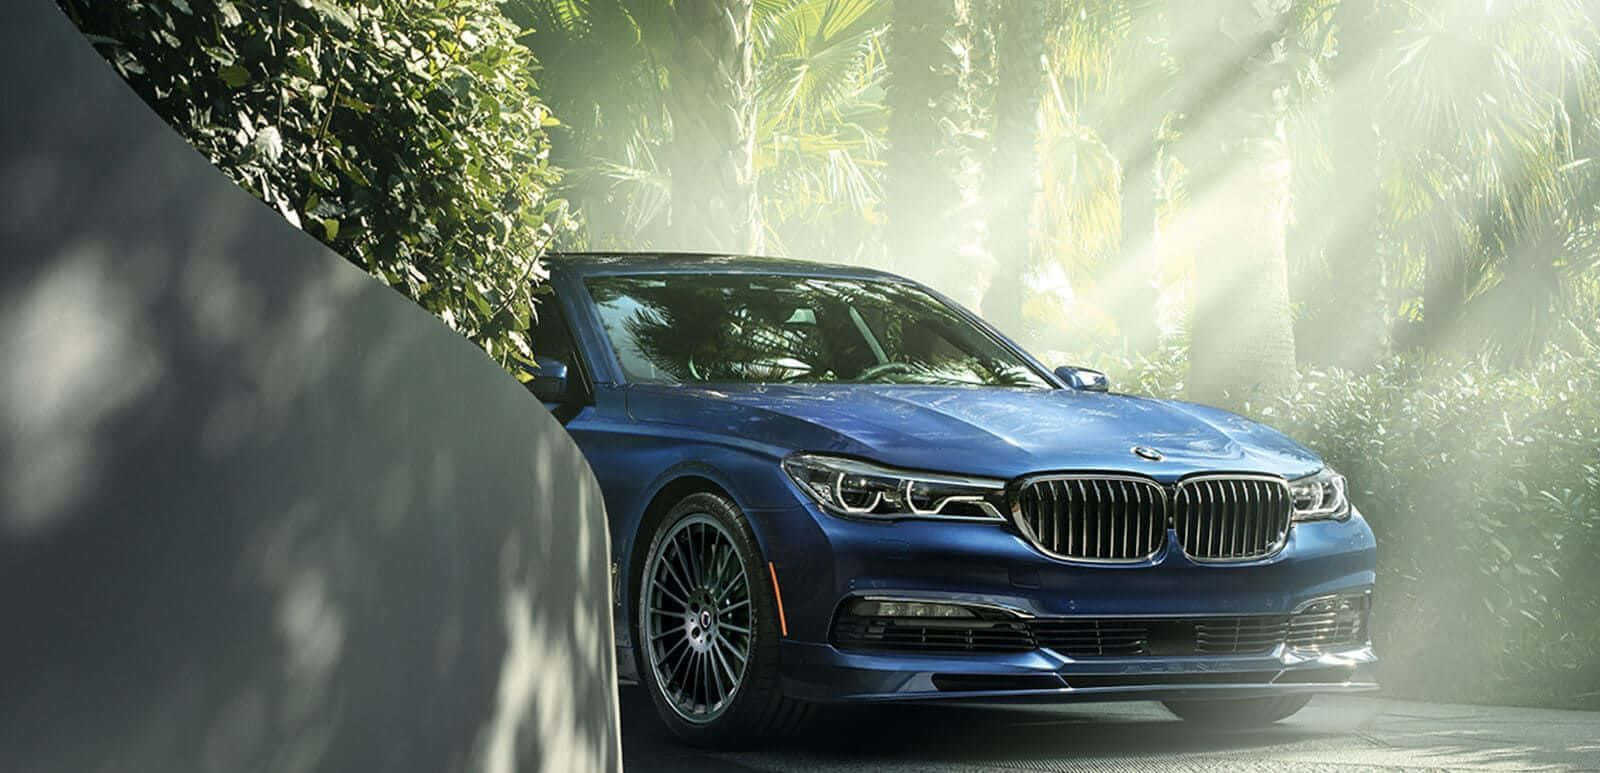 Sleek BMW 7 Series in Motion Wallpaper